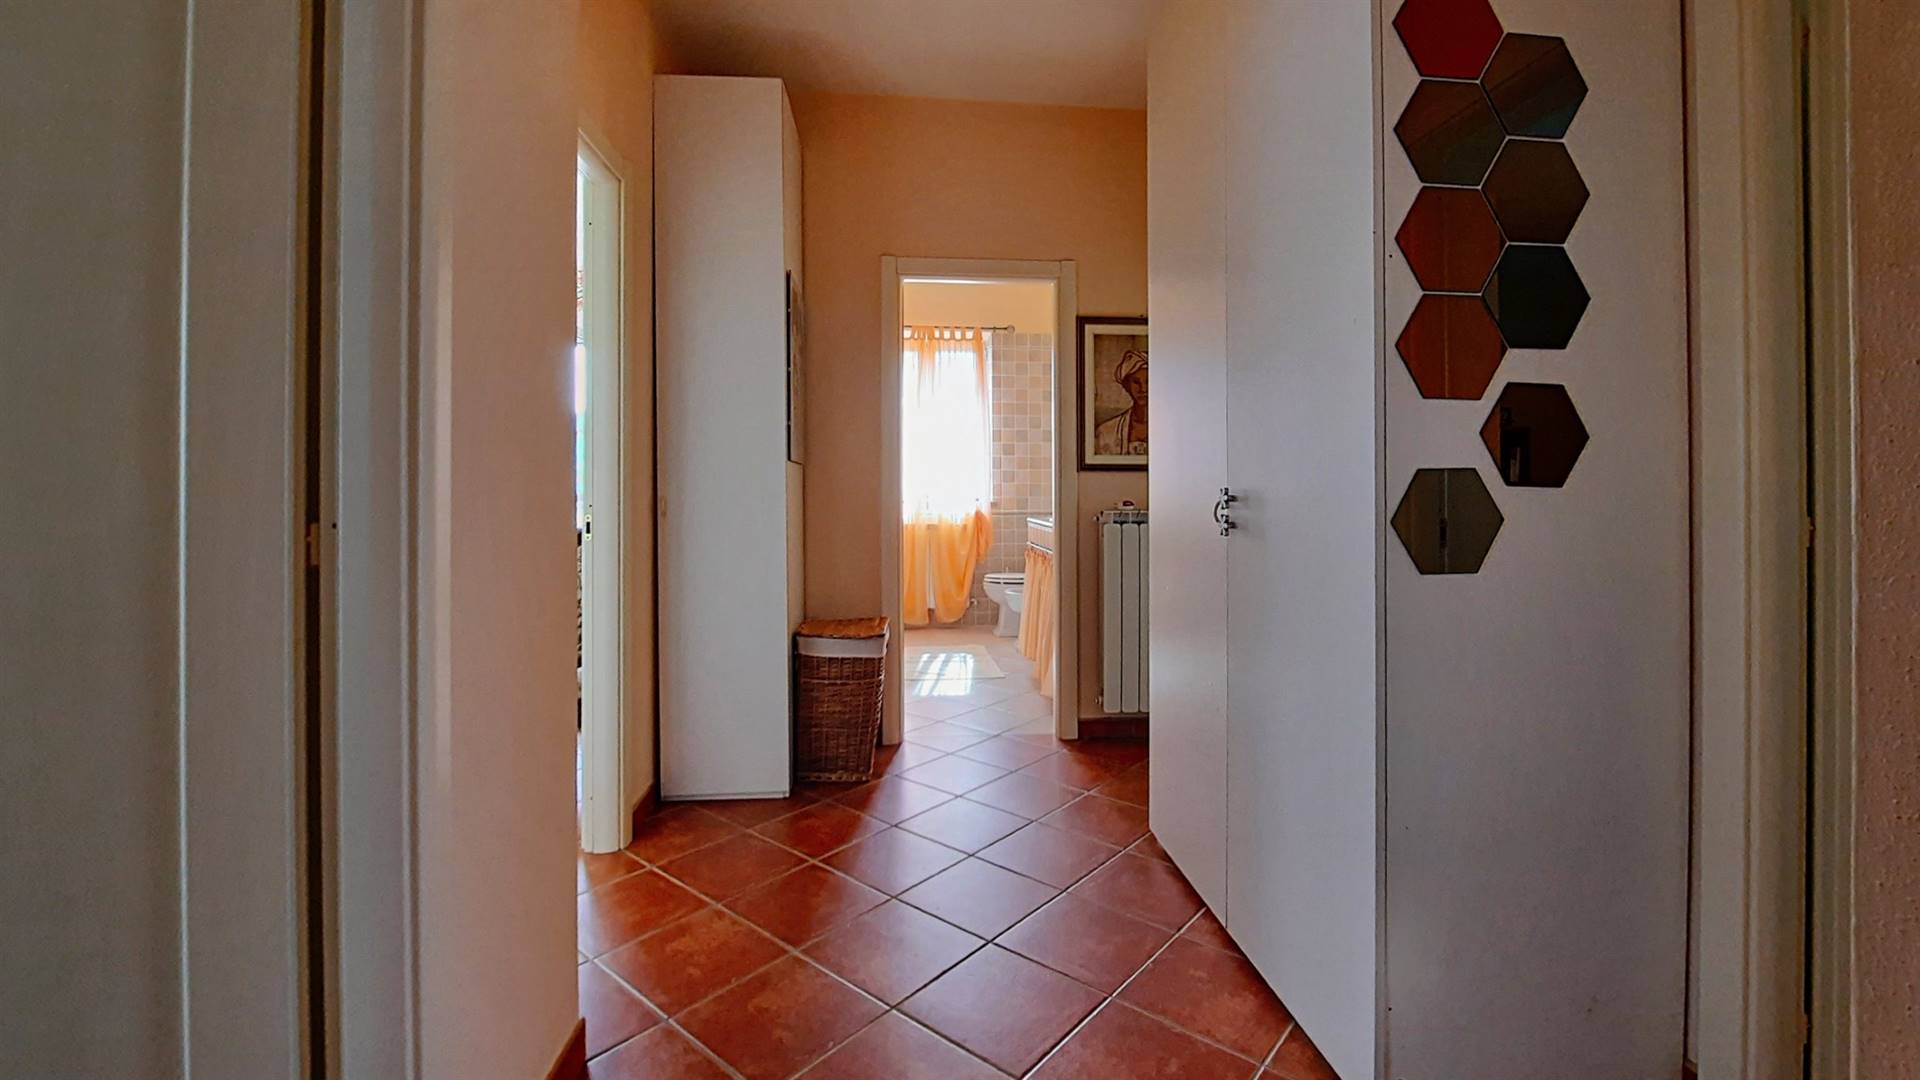 Corridoio camere - Corridor in the bedroom area